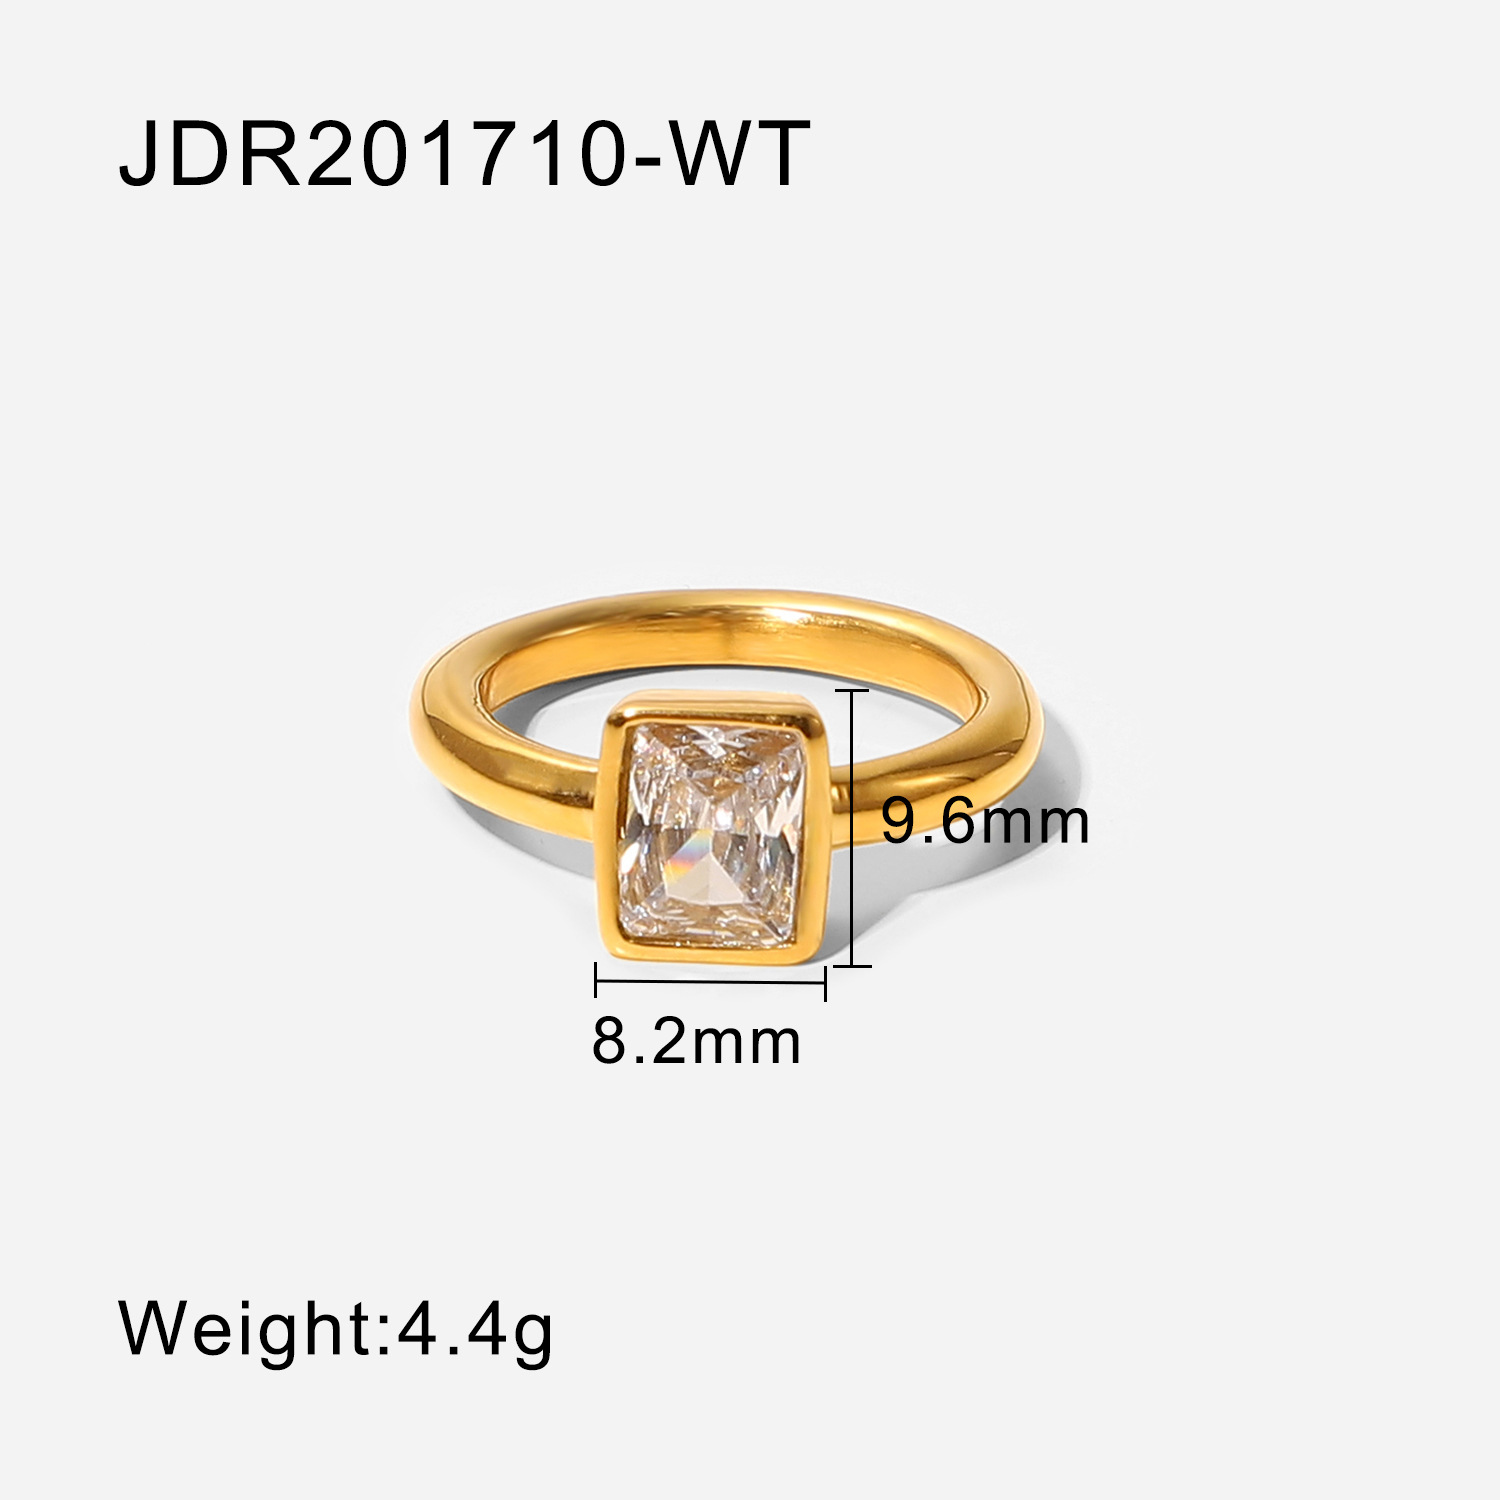 JDR201710-WT No.6